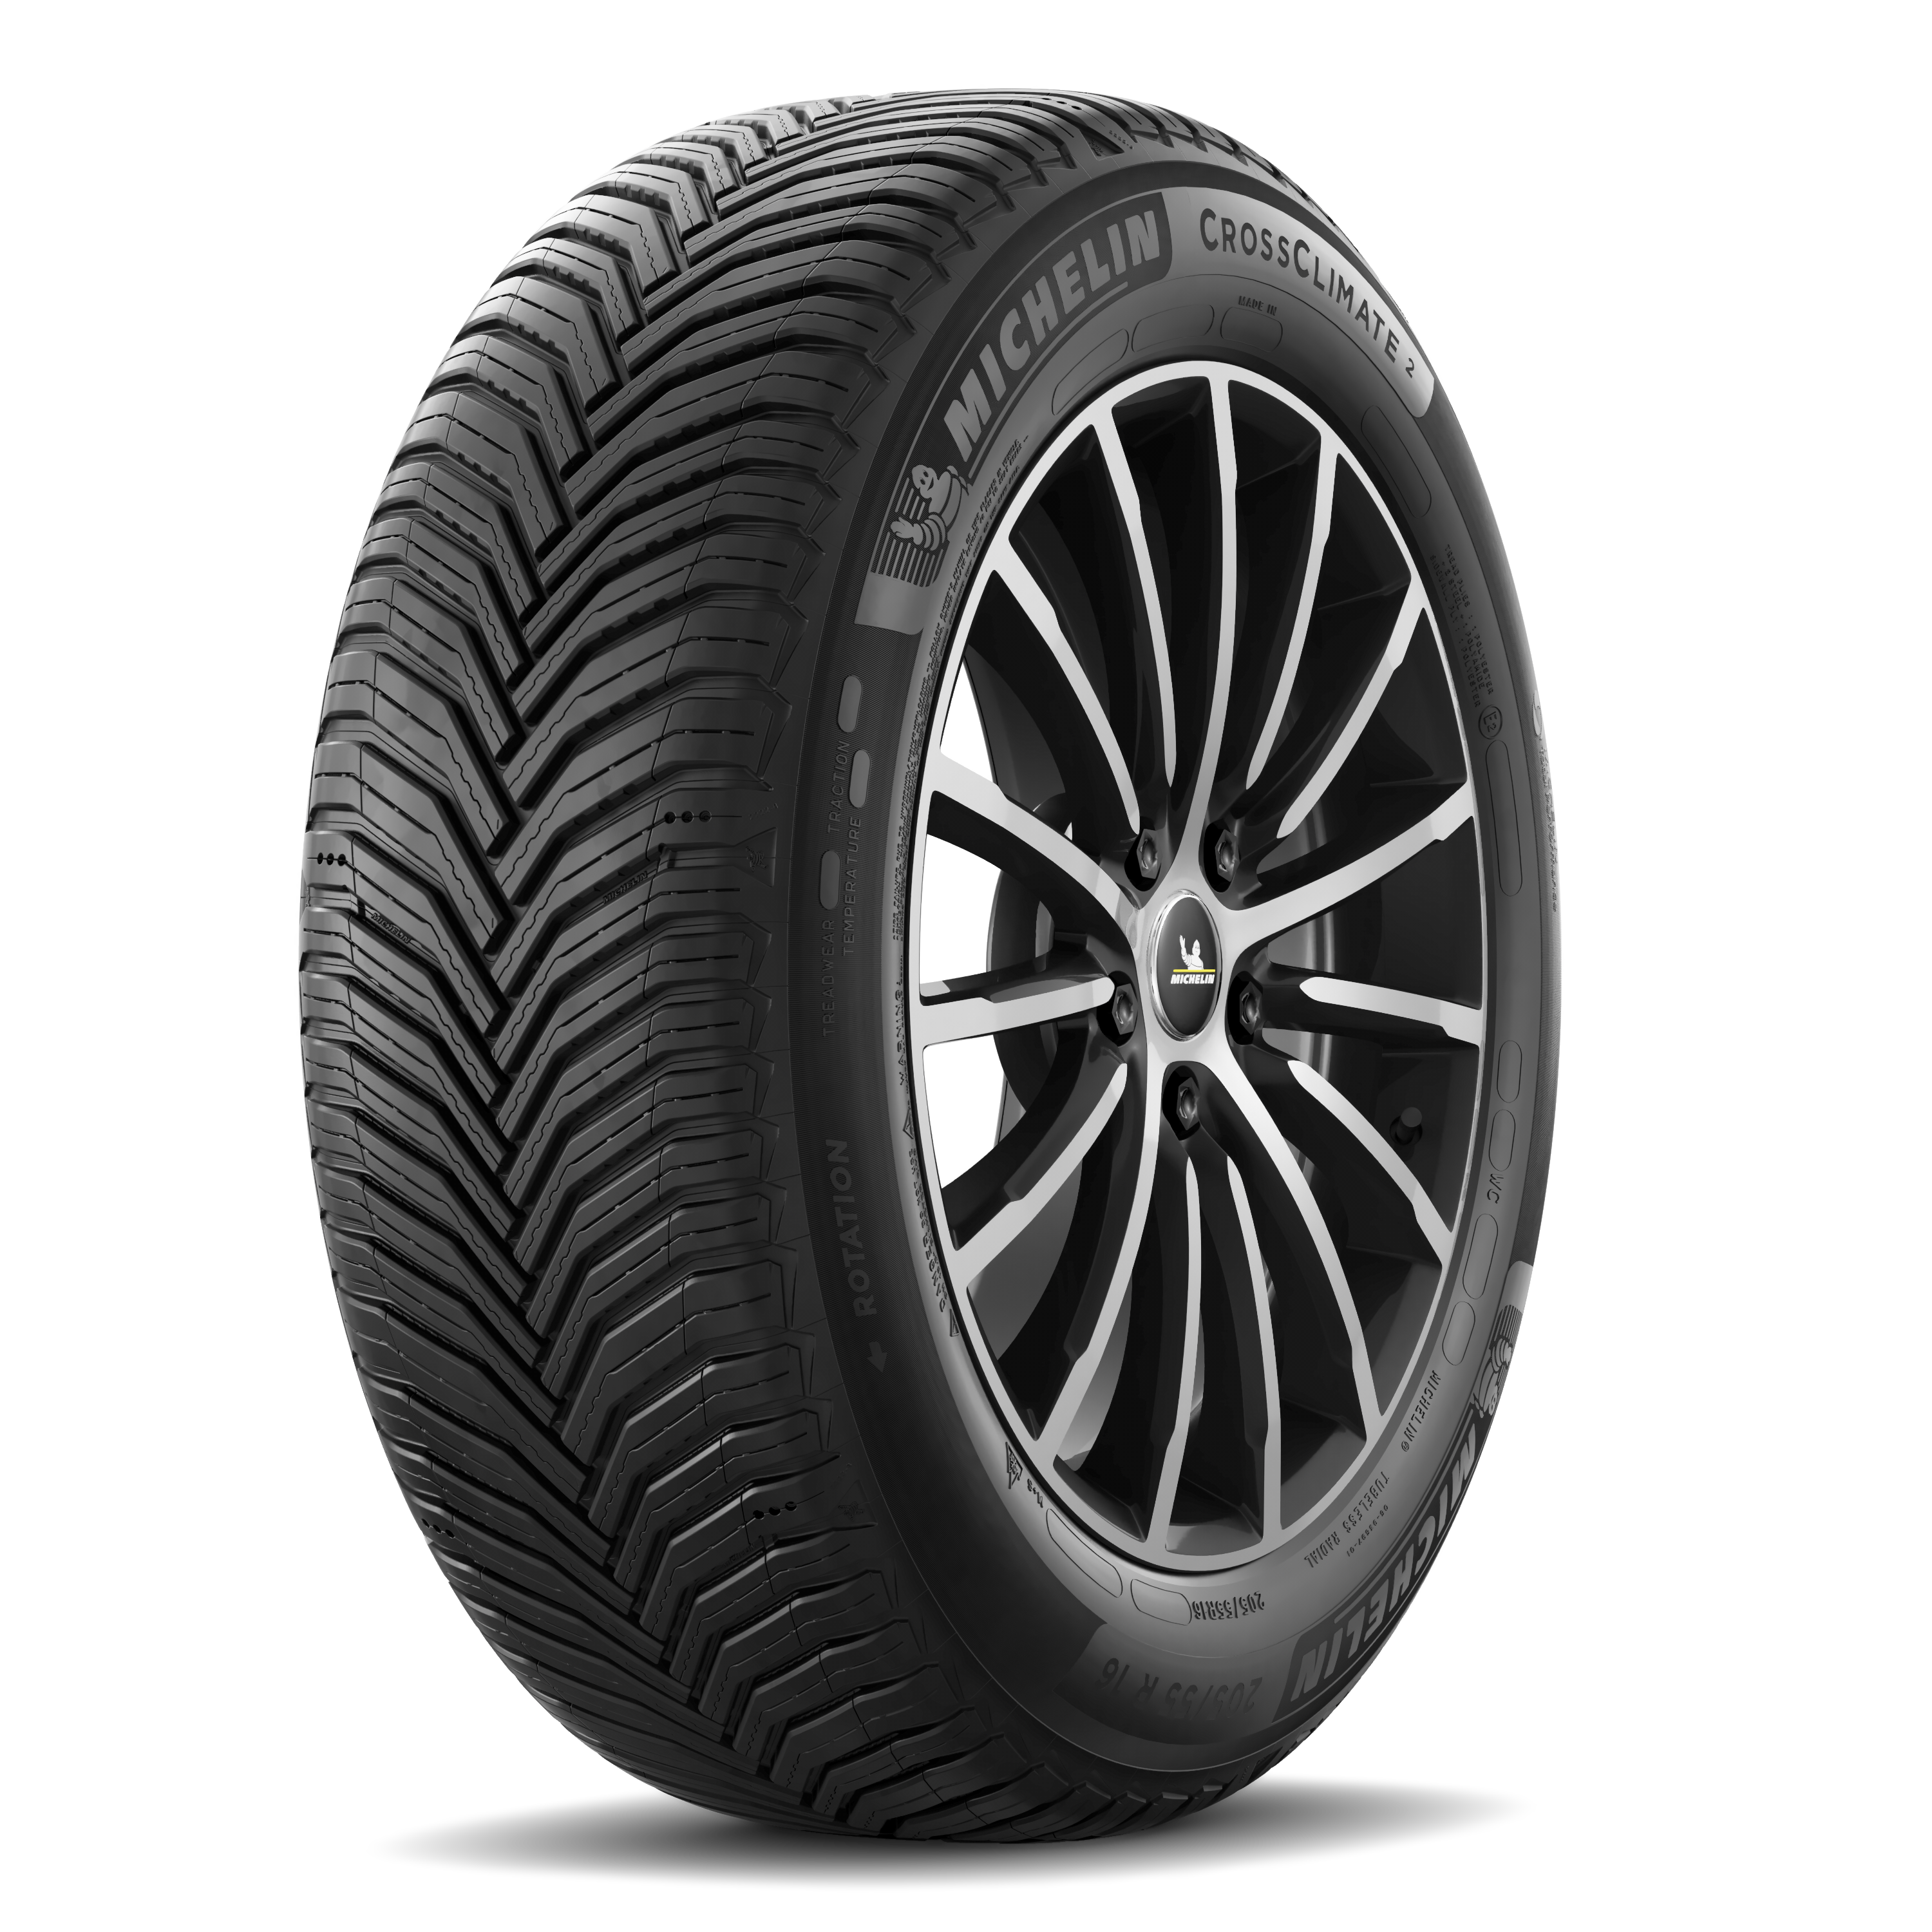 Gomme Nuove Michelin 175/60 R14 83H CROSSCLIMATE PLUS XL M+S pneumatici nuovi All Season